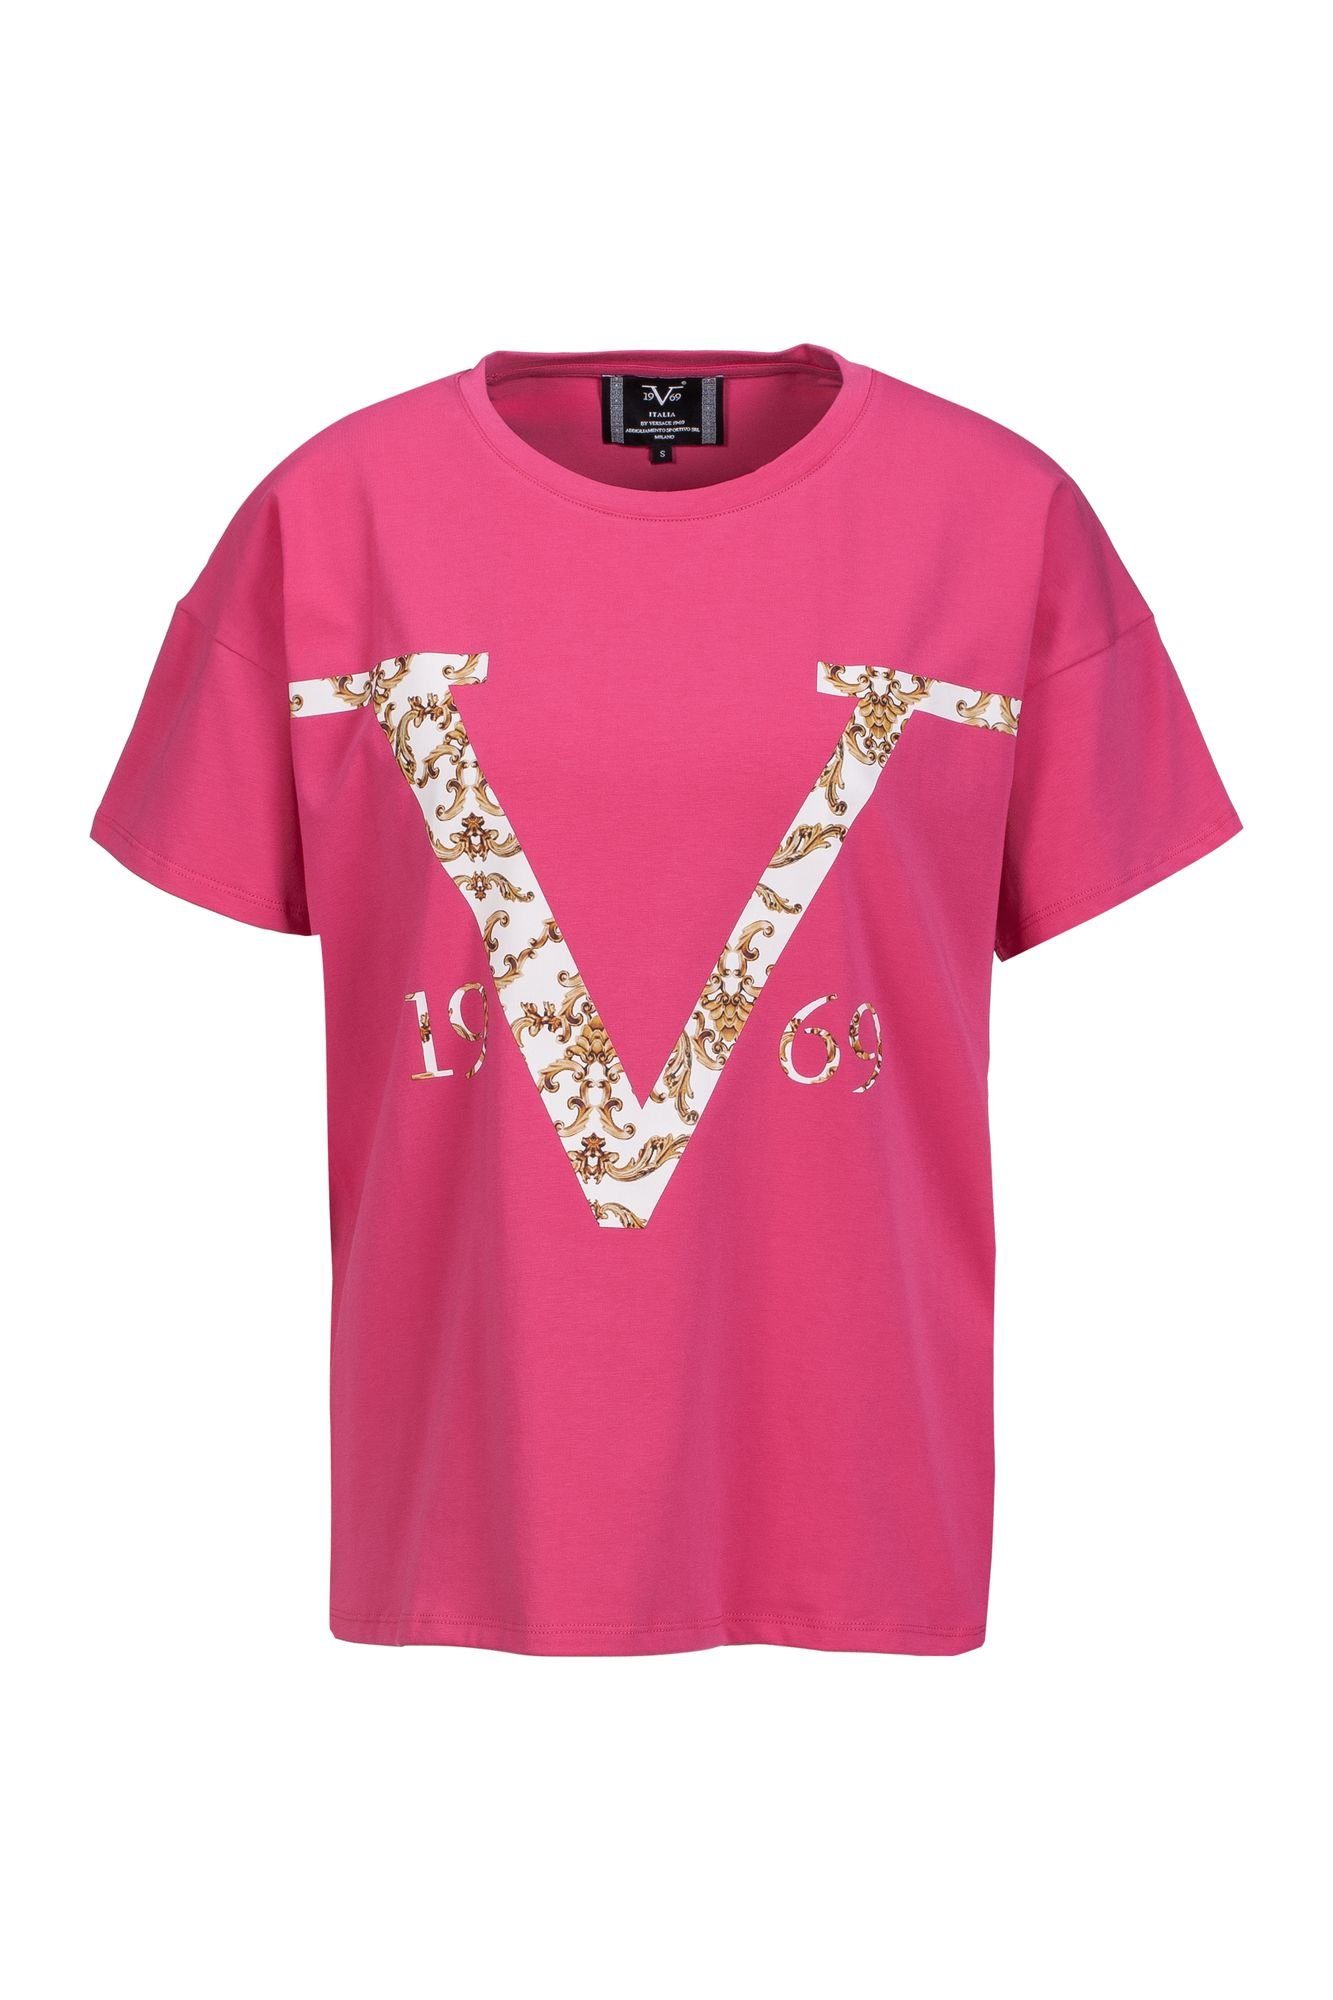 by by Italia Sportivo Josephine SRL - Versace PINK T-Shirt 19V69 Versace